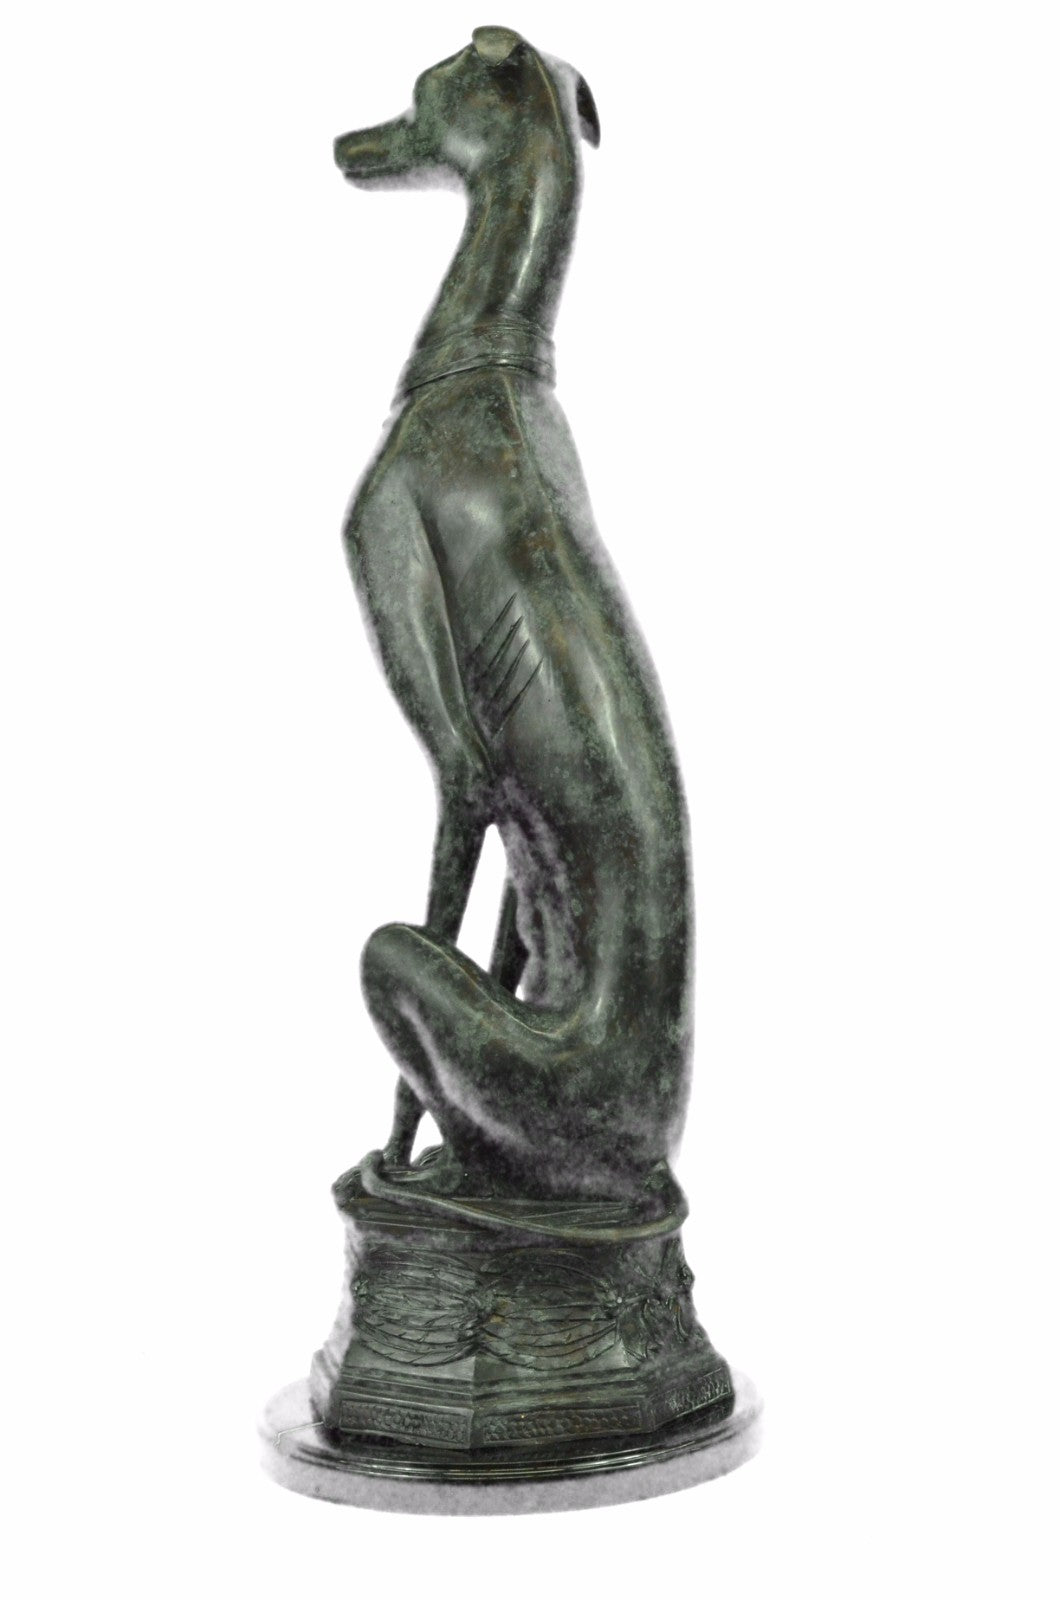 31" Tall Italian Greyhound with Special Patina Bronze Artwork Sculpture Animal